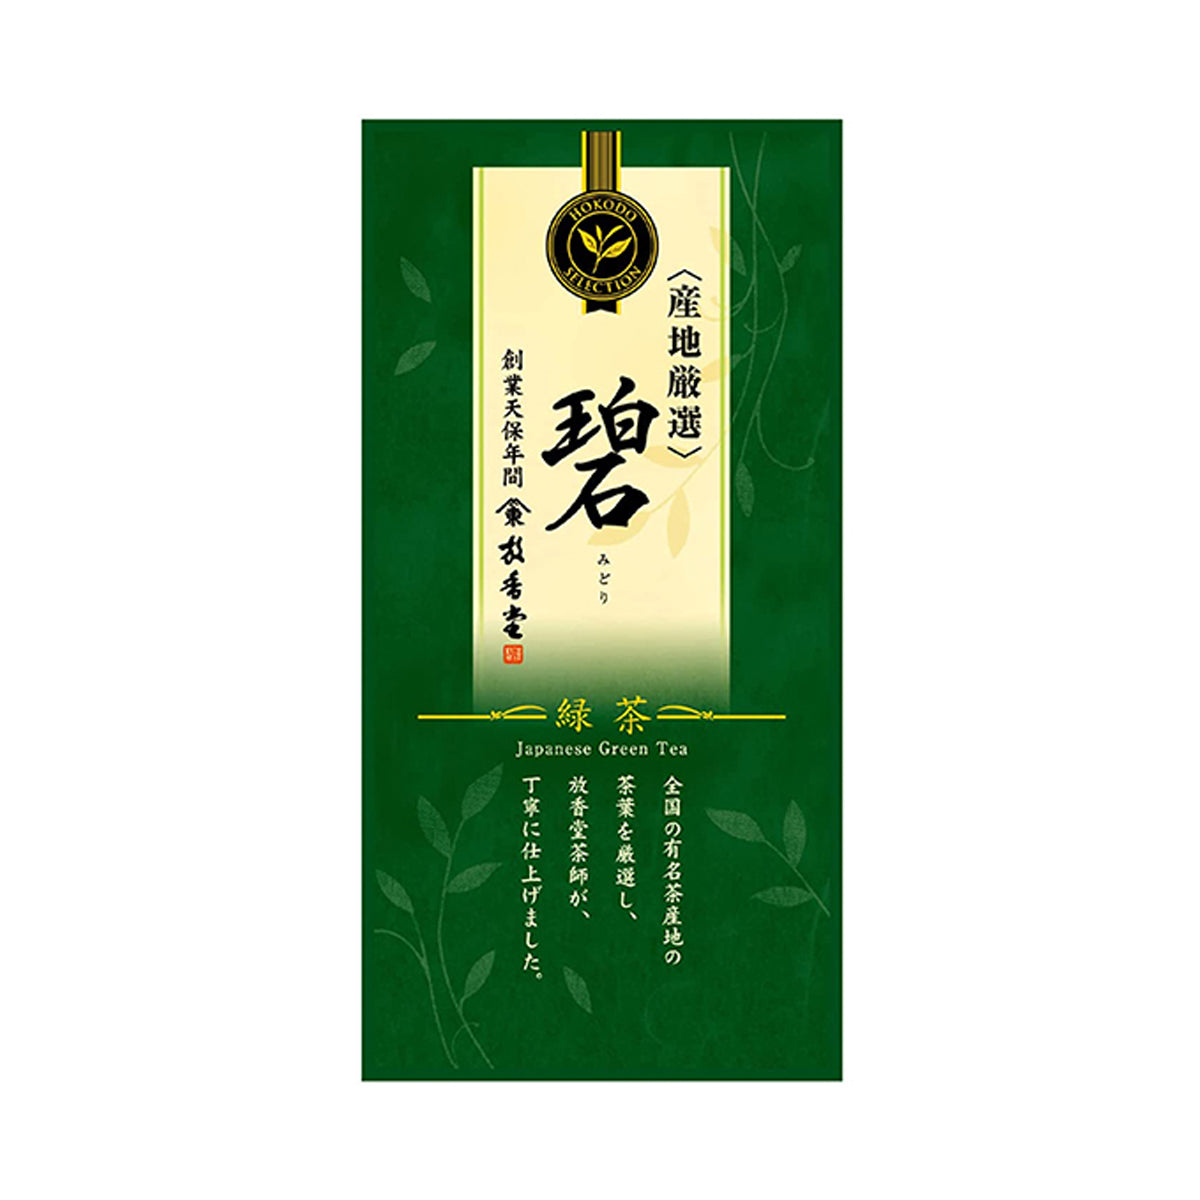 Premium Loose Leaf Sencha Tea from Japan